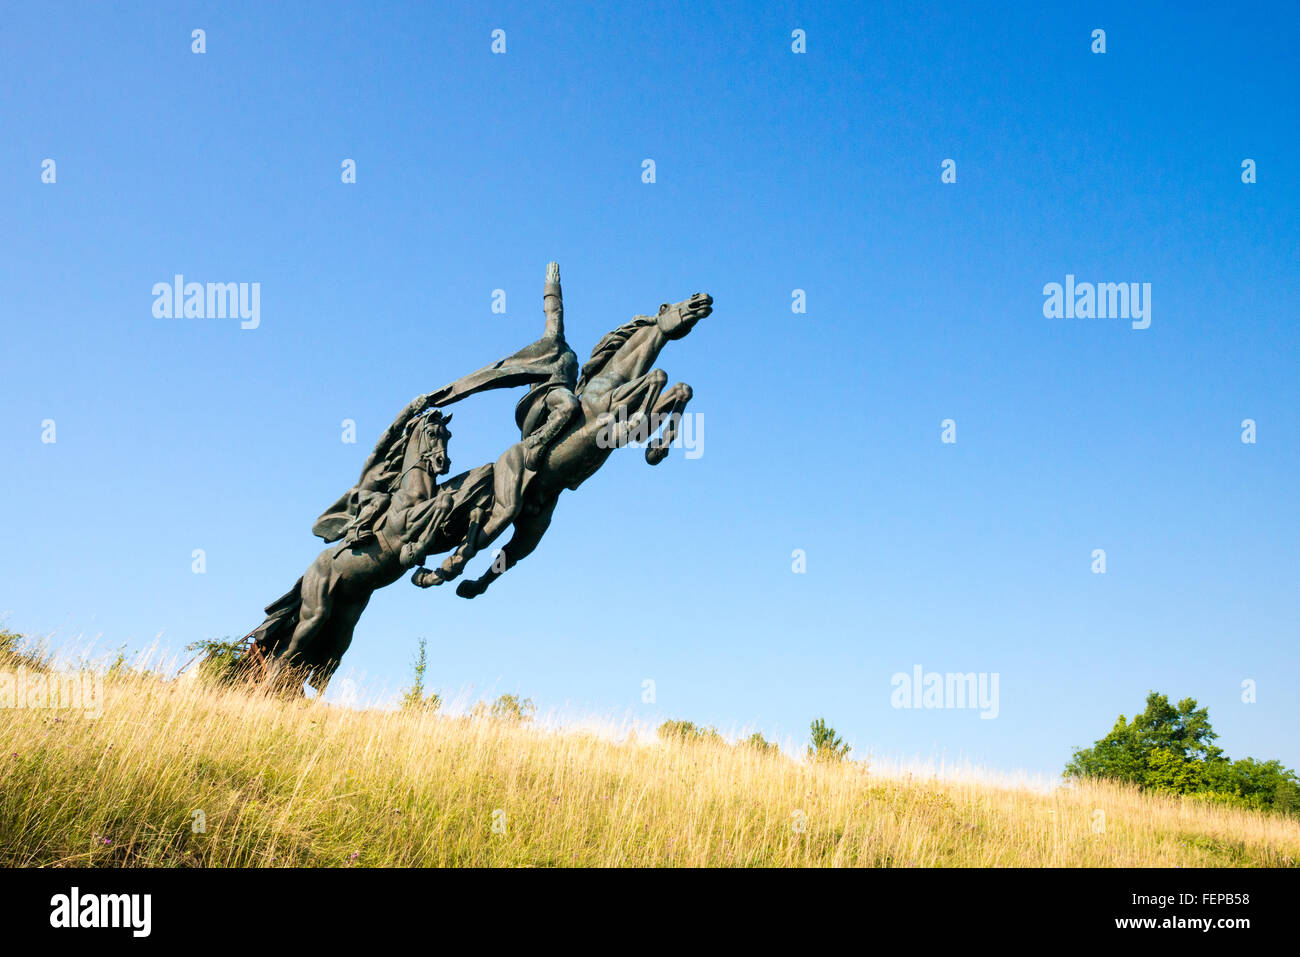 Soviet monument of 1975 to the 1st Cavalry Army of Budyonny' (Konarmia) near Olesko, Lviv Region, Ukraine Stock Photo